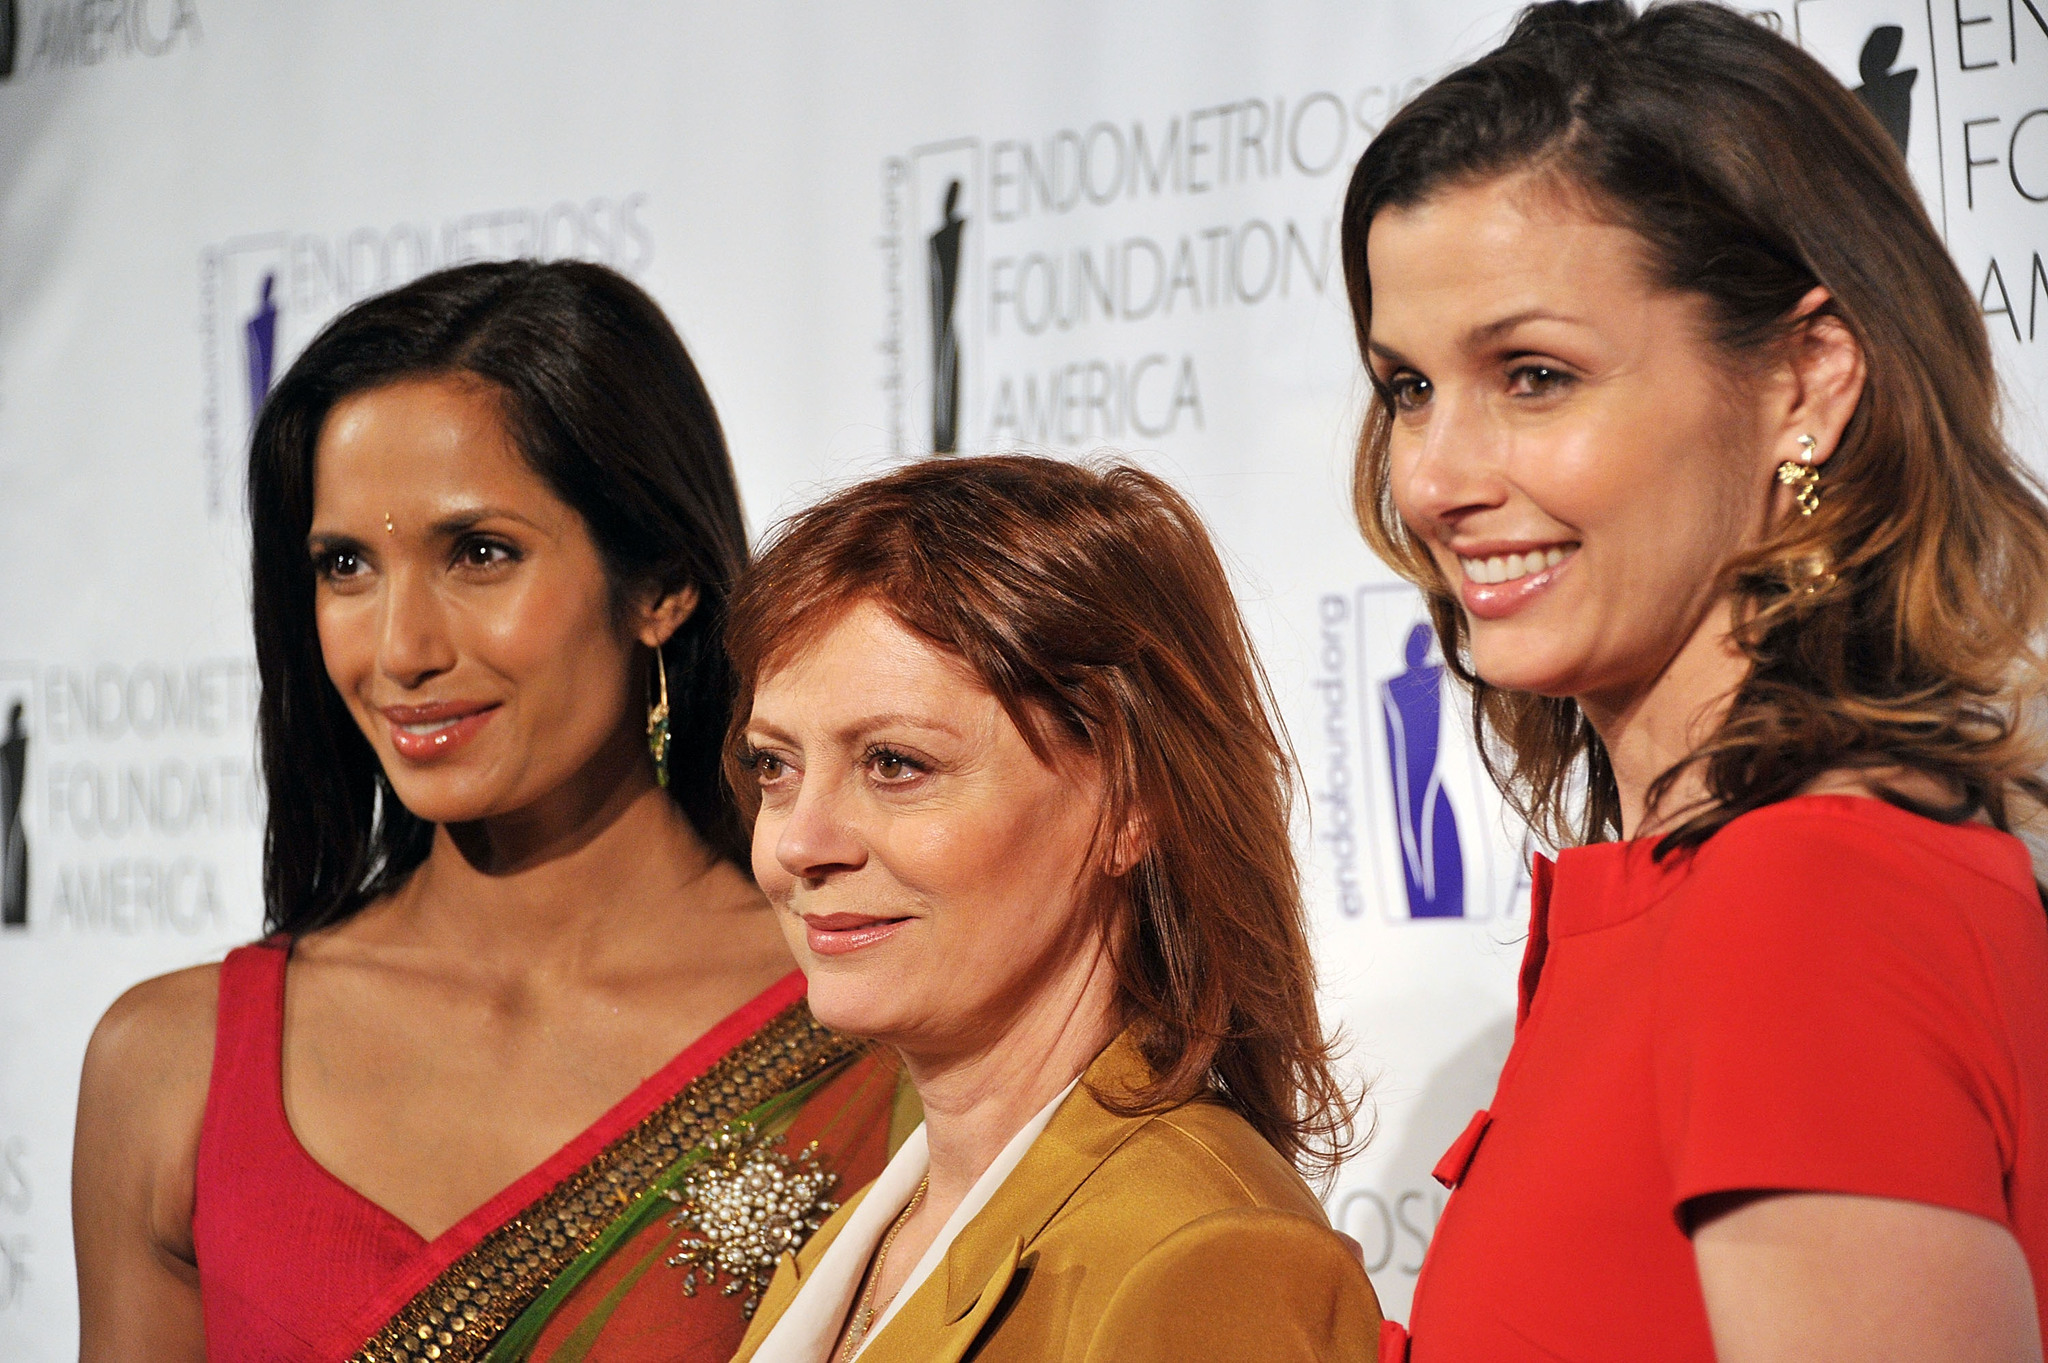 Susan Sarandon, Bridget Moynahan and Padma Lakshmi